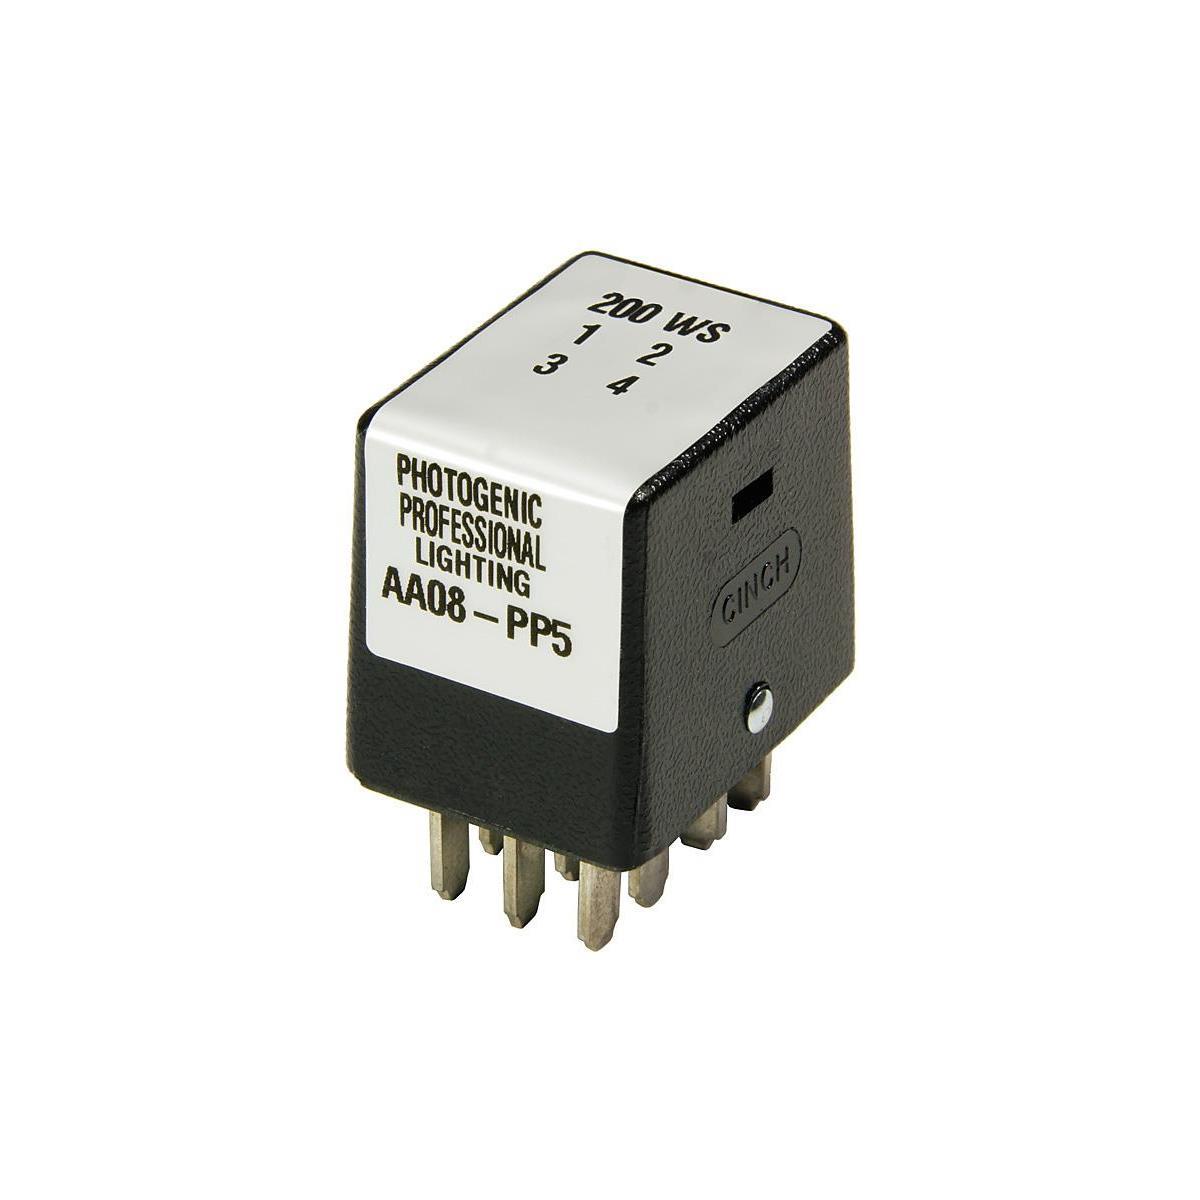 Image of Photogenic AA08-PP5 Power Ratio Plug for AA08